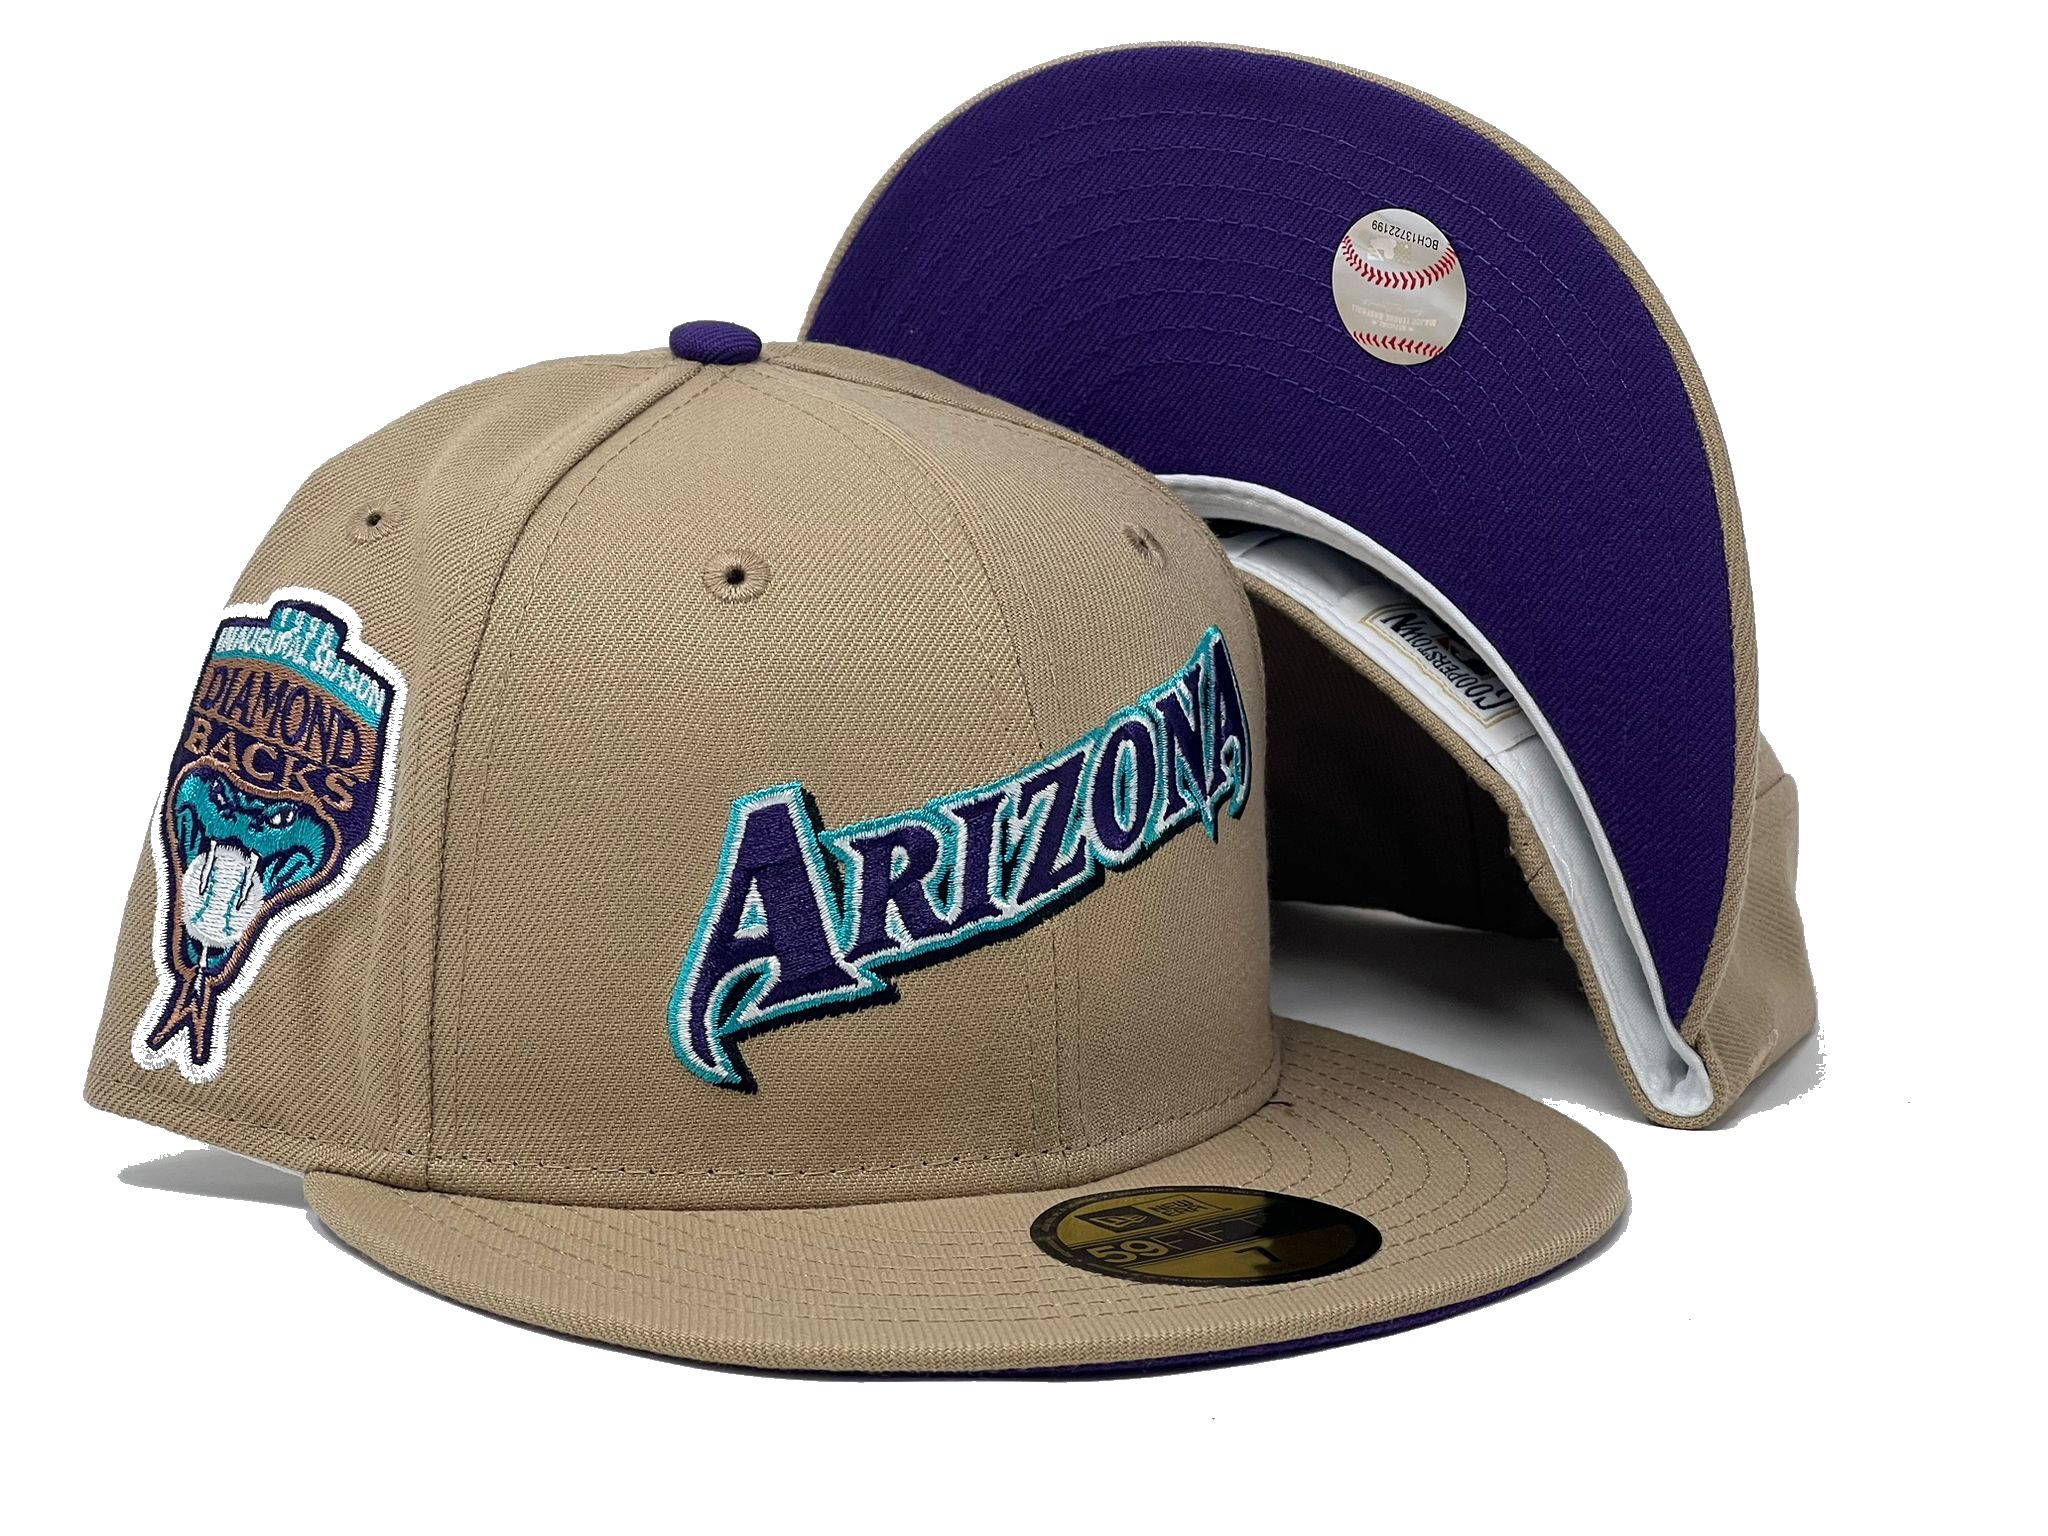 New Era Arizona Diamondbacks Custom Cooperstown 59FIFTY Fitted Hat -  Teal/Purple